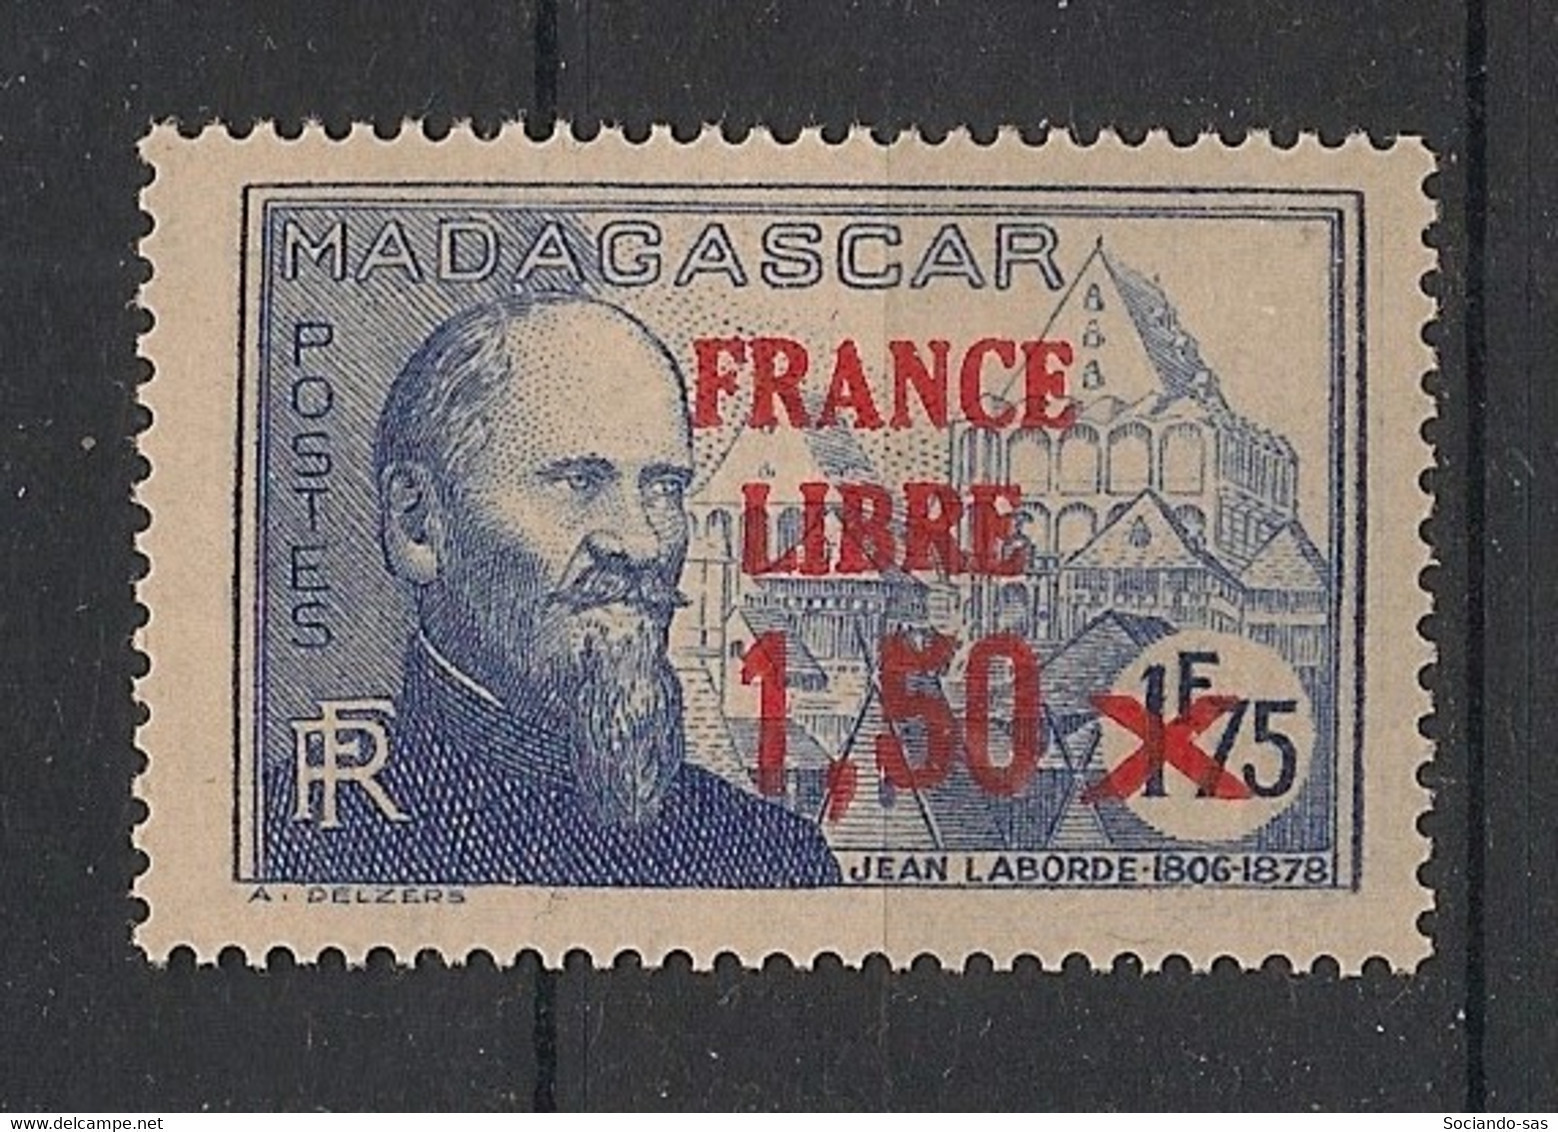 MADAGASCAR - 1942 - N°YT. 263 - France Libre 1f75 Sur 1f50 - Neuf Luxe ** / MNH / Postfrisch - Neufs